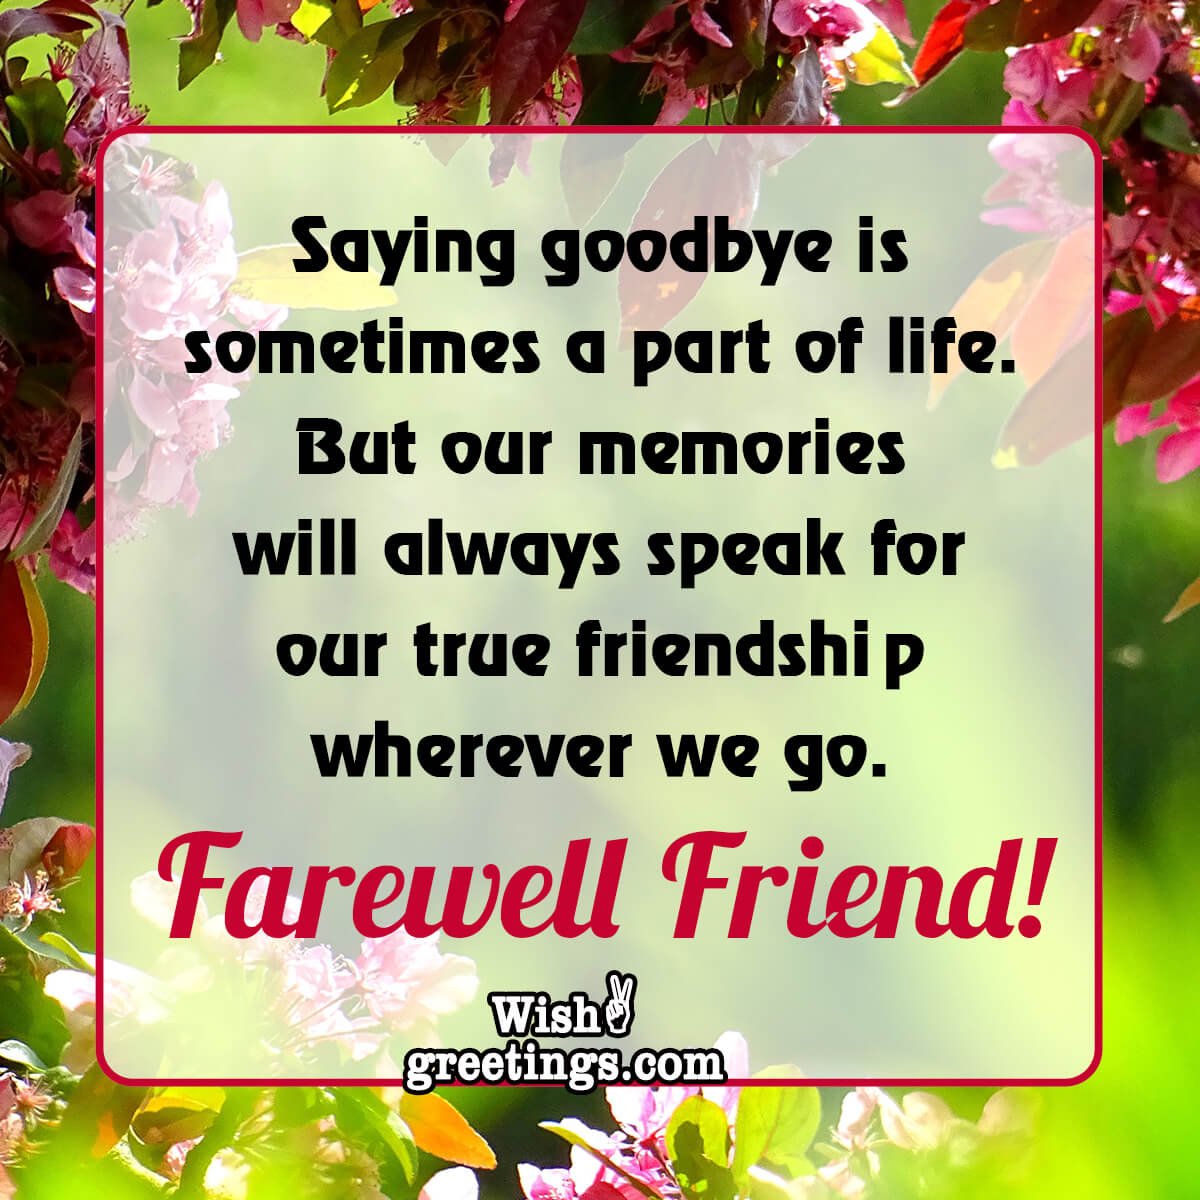 Farewell Friend!